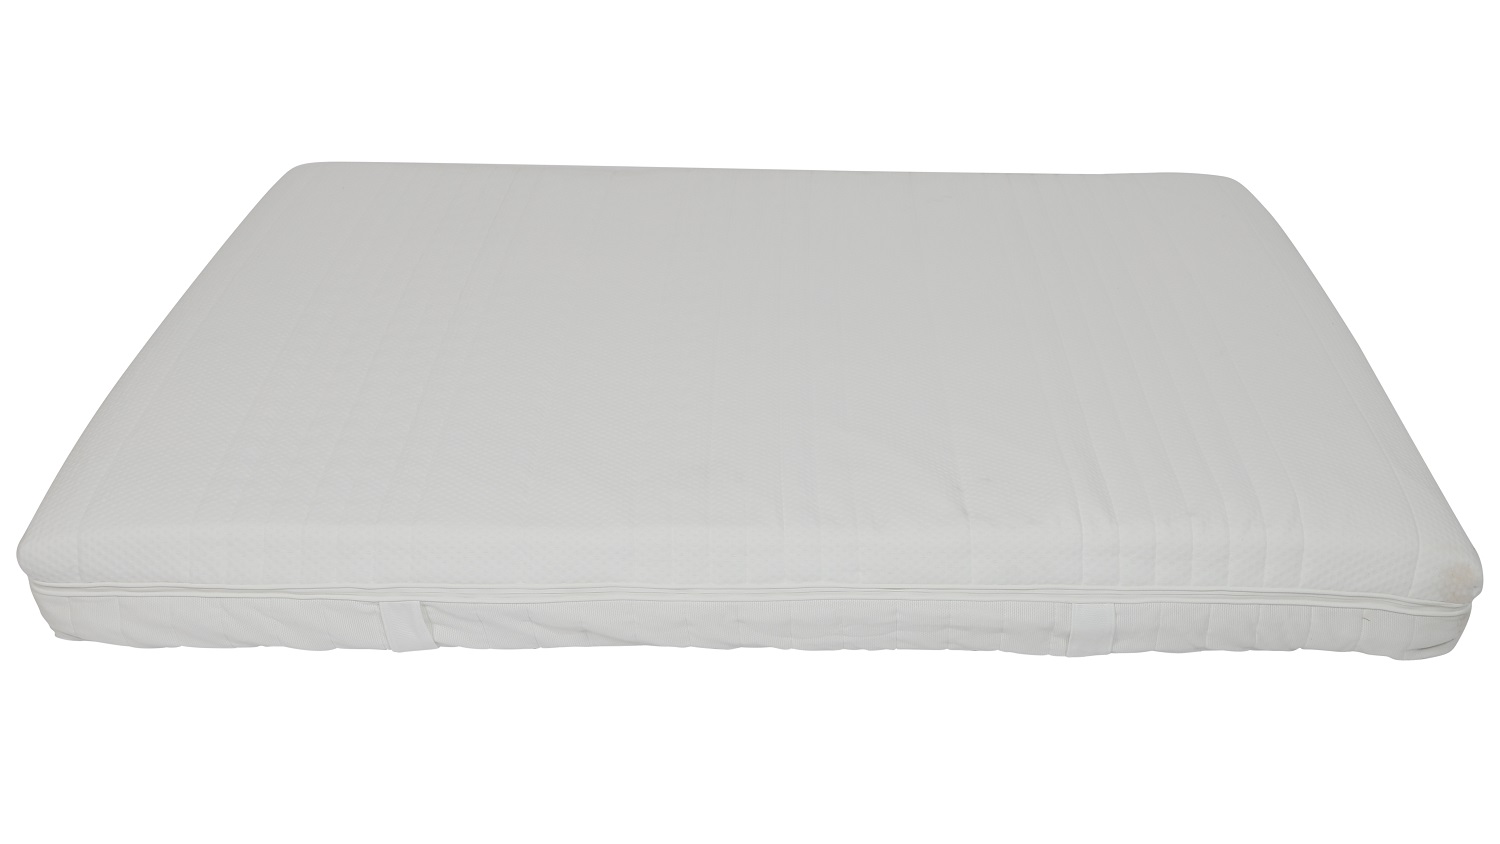 ikea review on mattress